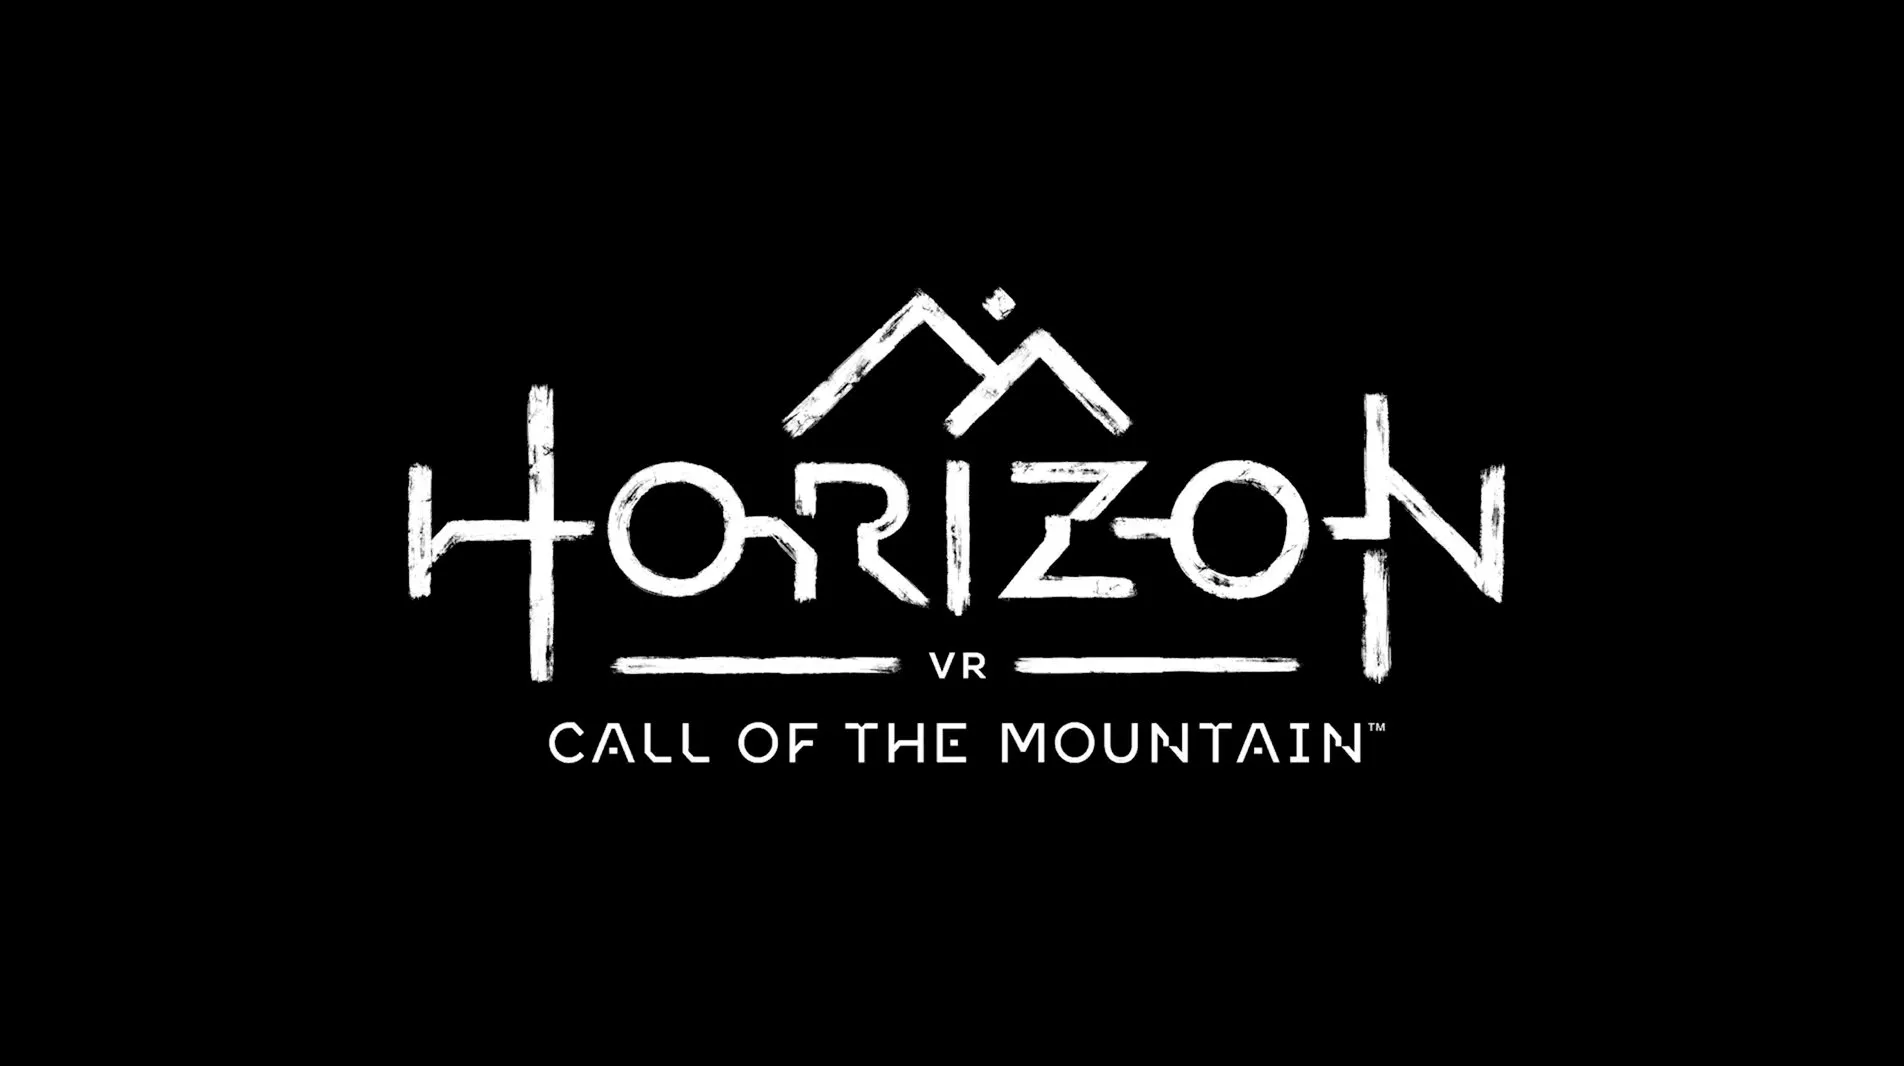 Horizon Call of the Mountain für PS VR2 angekündigt Heropic